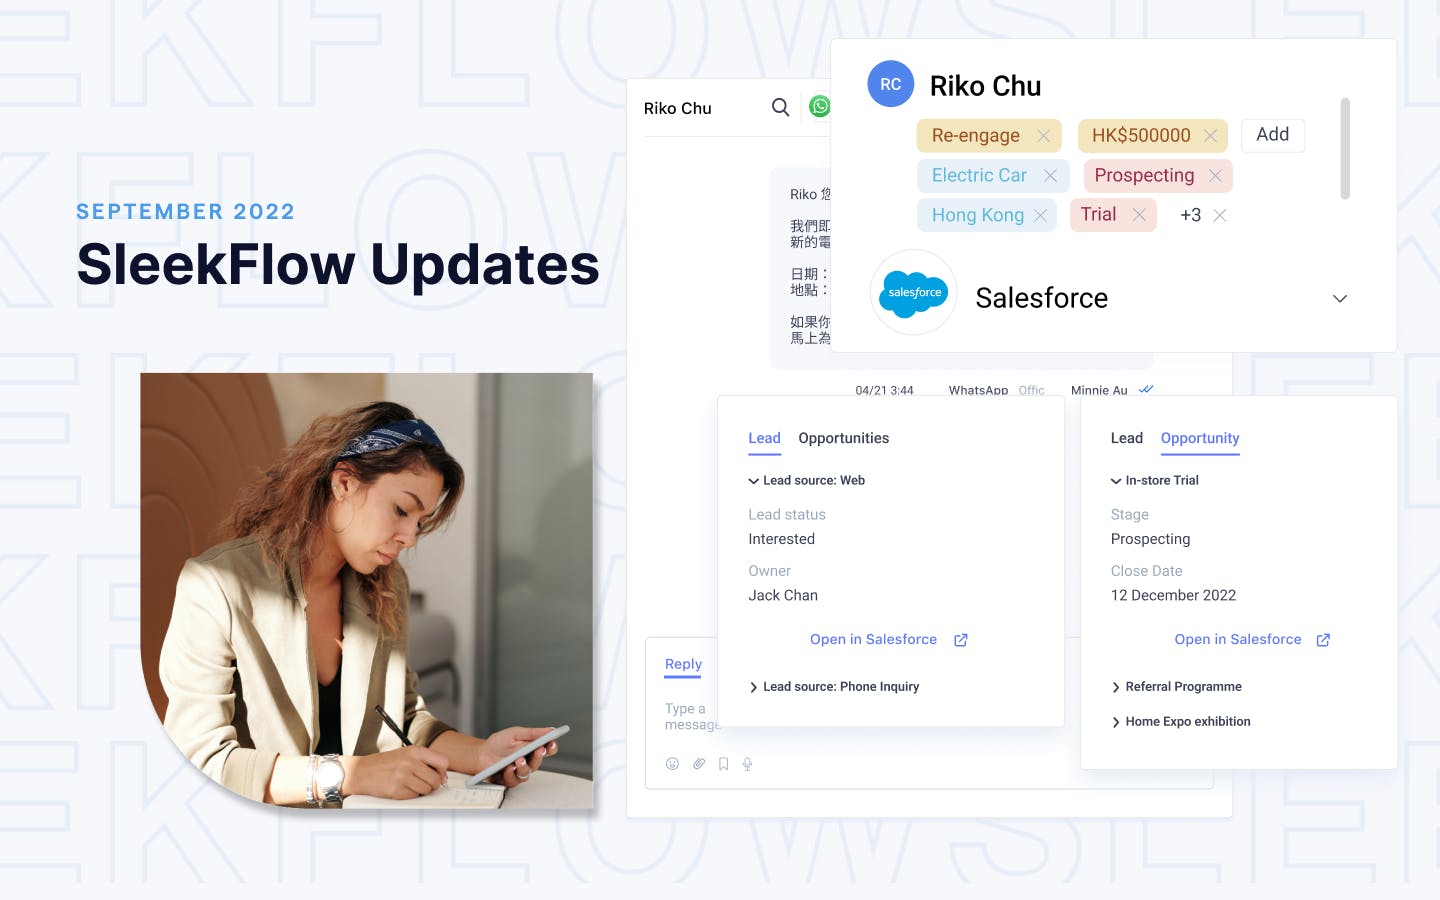 What’s new in SleekFlow: 同步更新 Salesforce 聯絡人、商機及機會